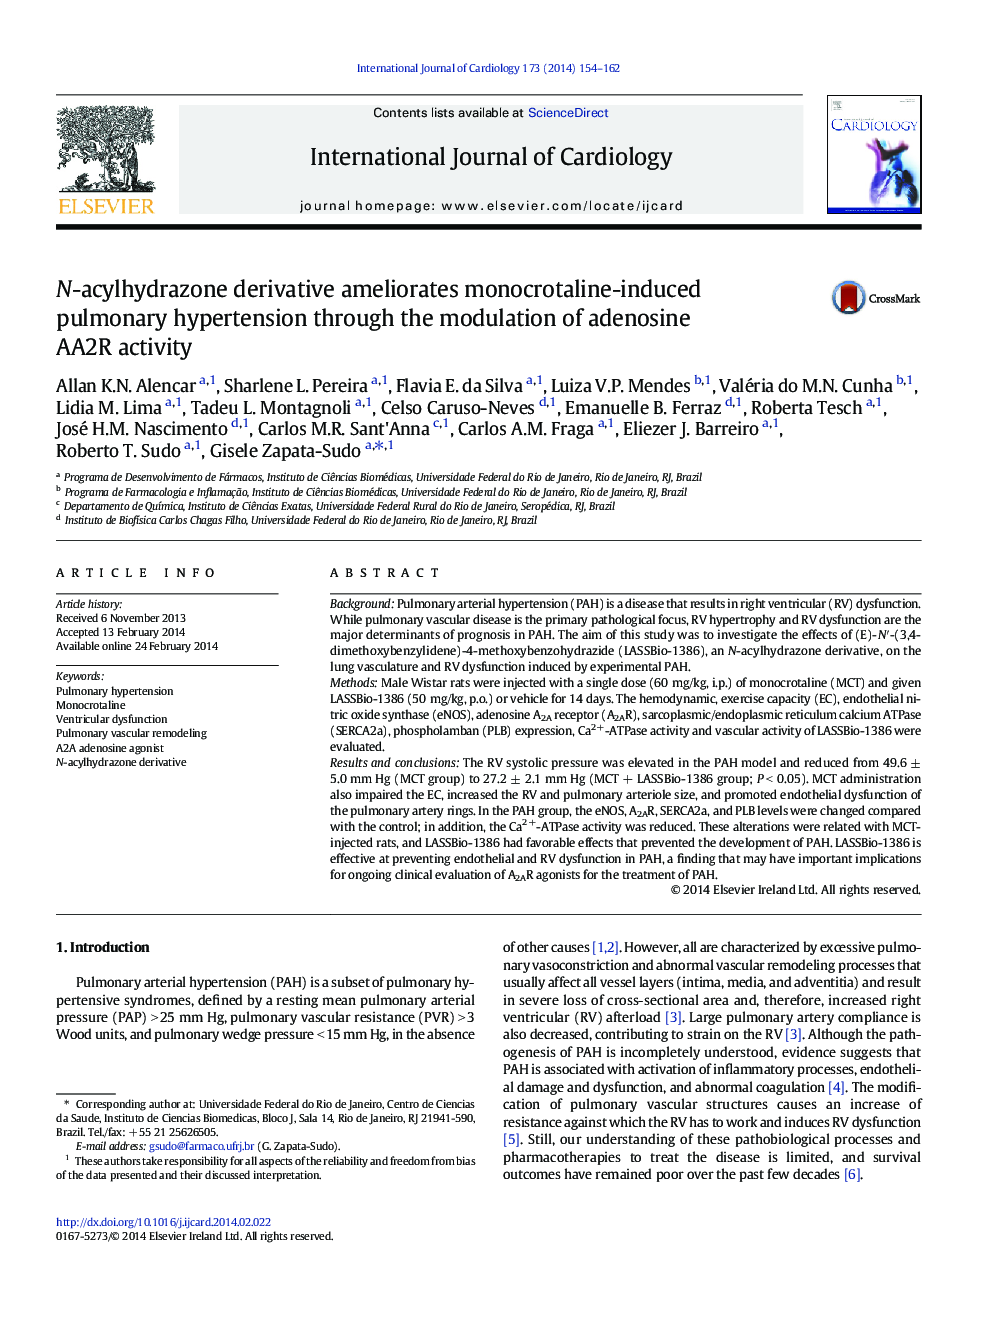 N-acylhydrazone derivative ameliorates monocrotaline-induced pulmonary hypertension through the modulation of adenosine AA2R activity